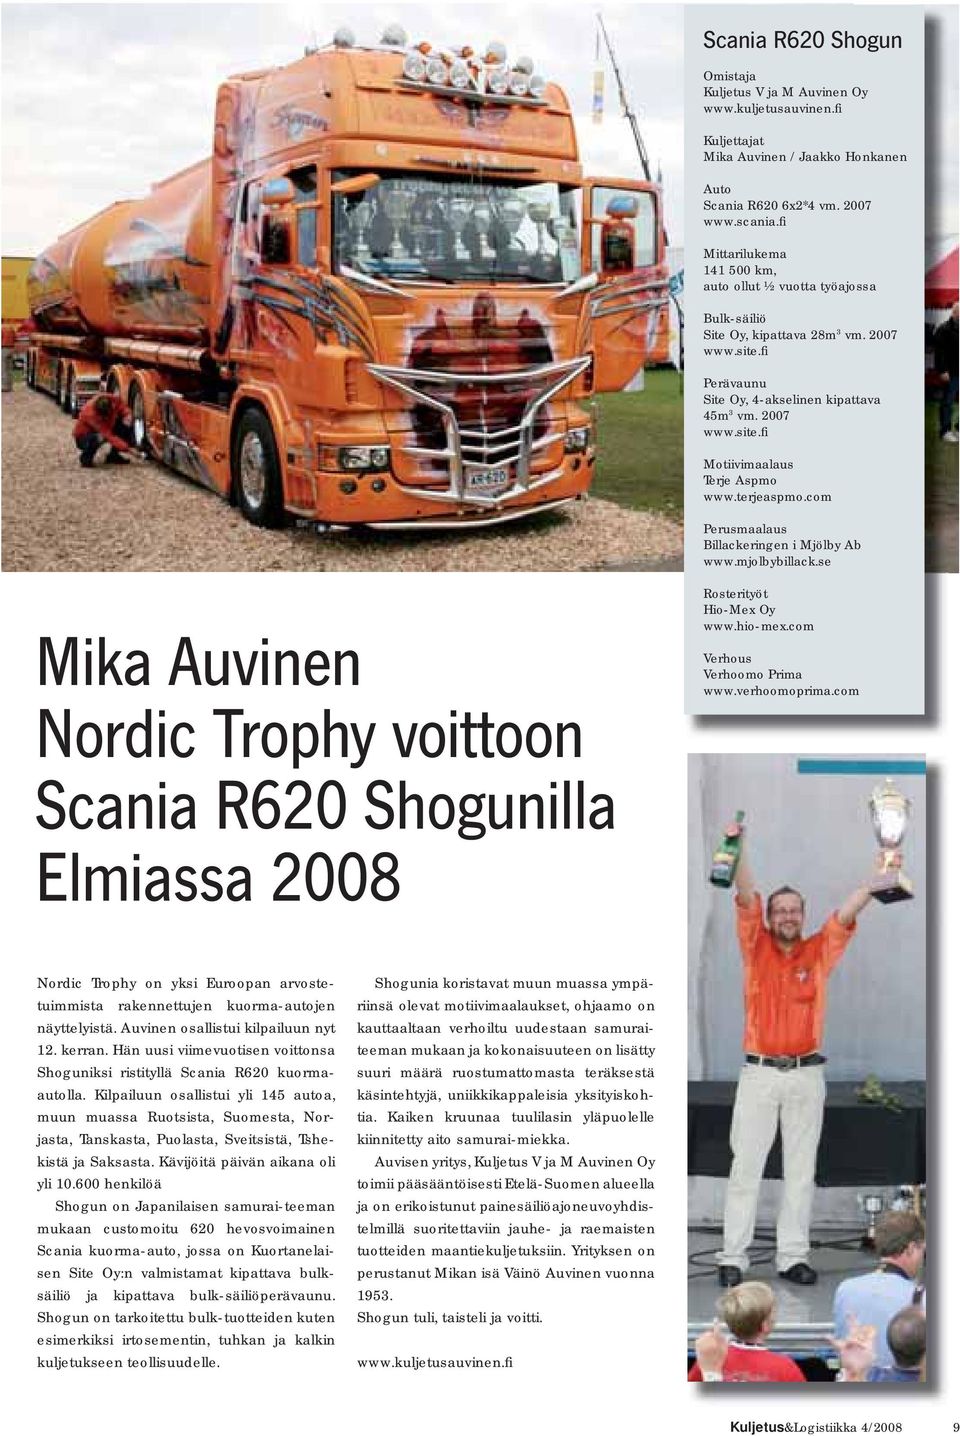 terjeaspmo.com Perusmaalaus Billackeringen i Mjölby Ab www.mjolbybillack.se Mika Auvinen Nordic Trophy voittoon Scania R620 Shogunilla Elmiassa 2008 Rosterityöt Hio-Mex Oy www.hio-mex.